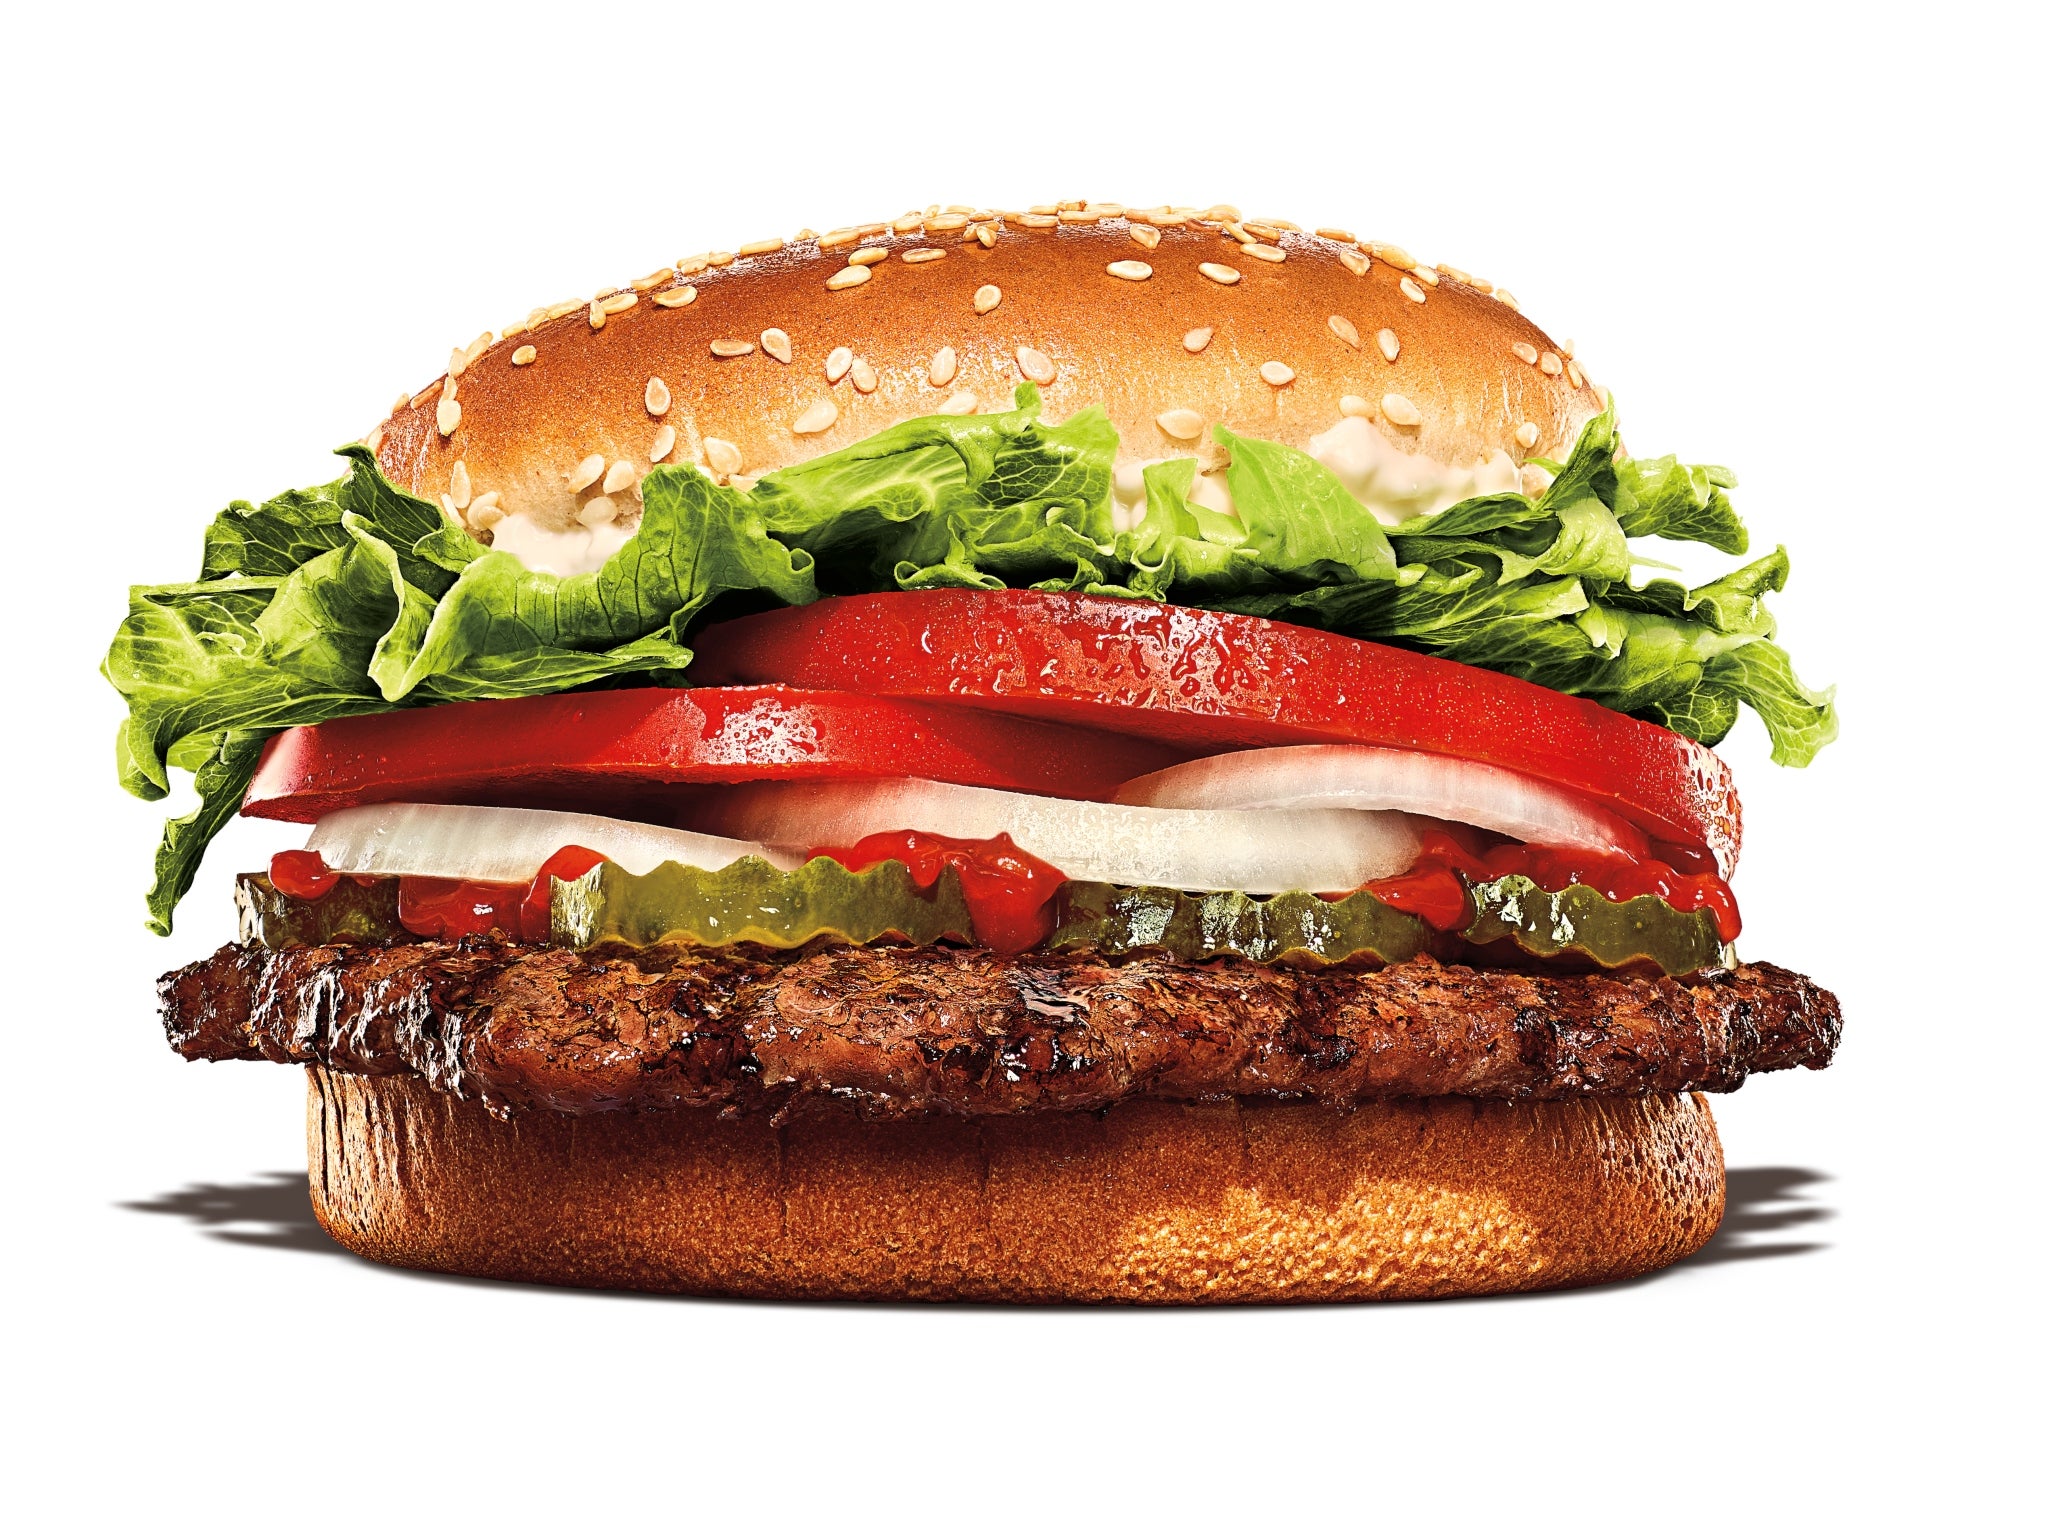 The lawsuit also demands that Burger King “correct the deceptive behavior.”